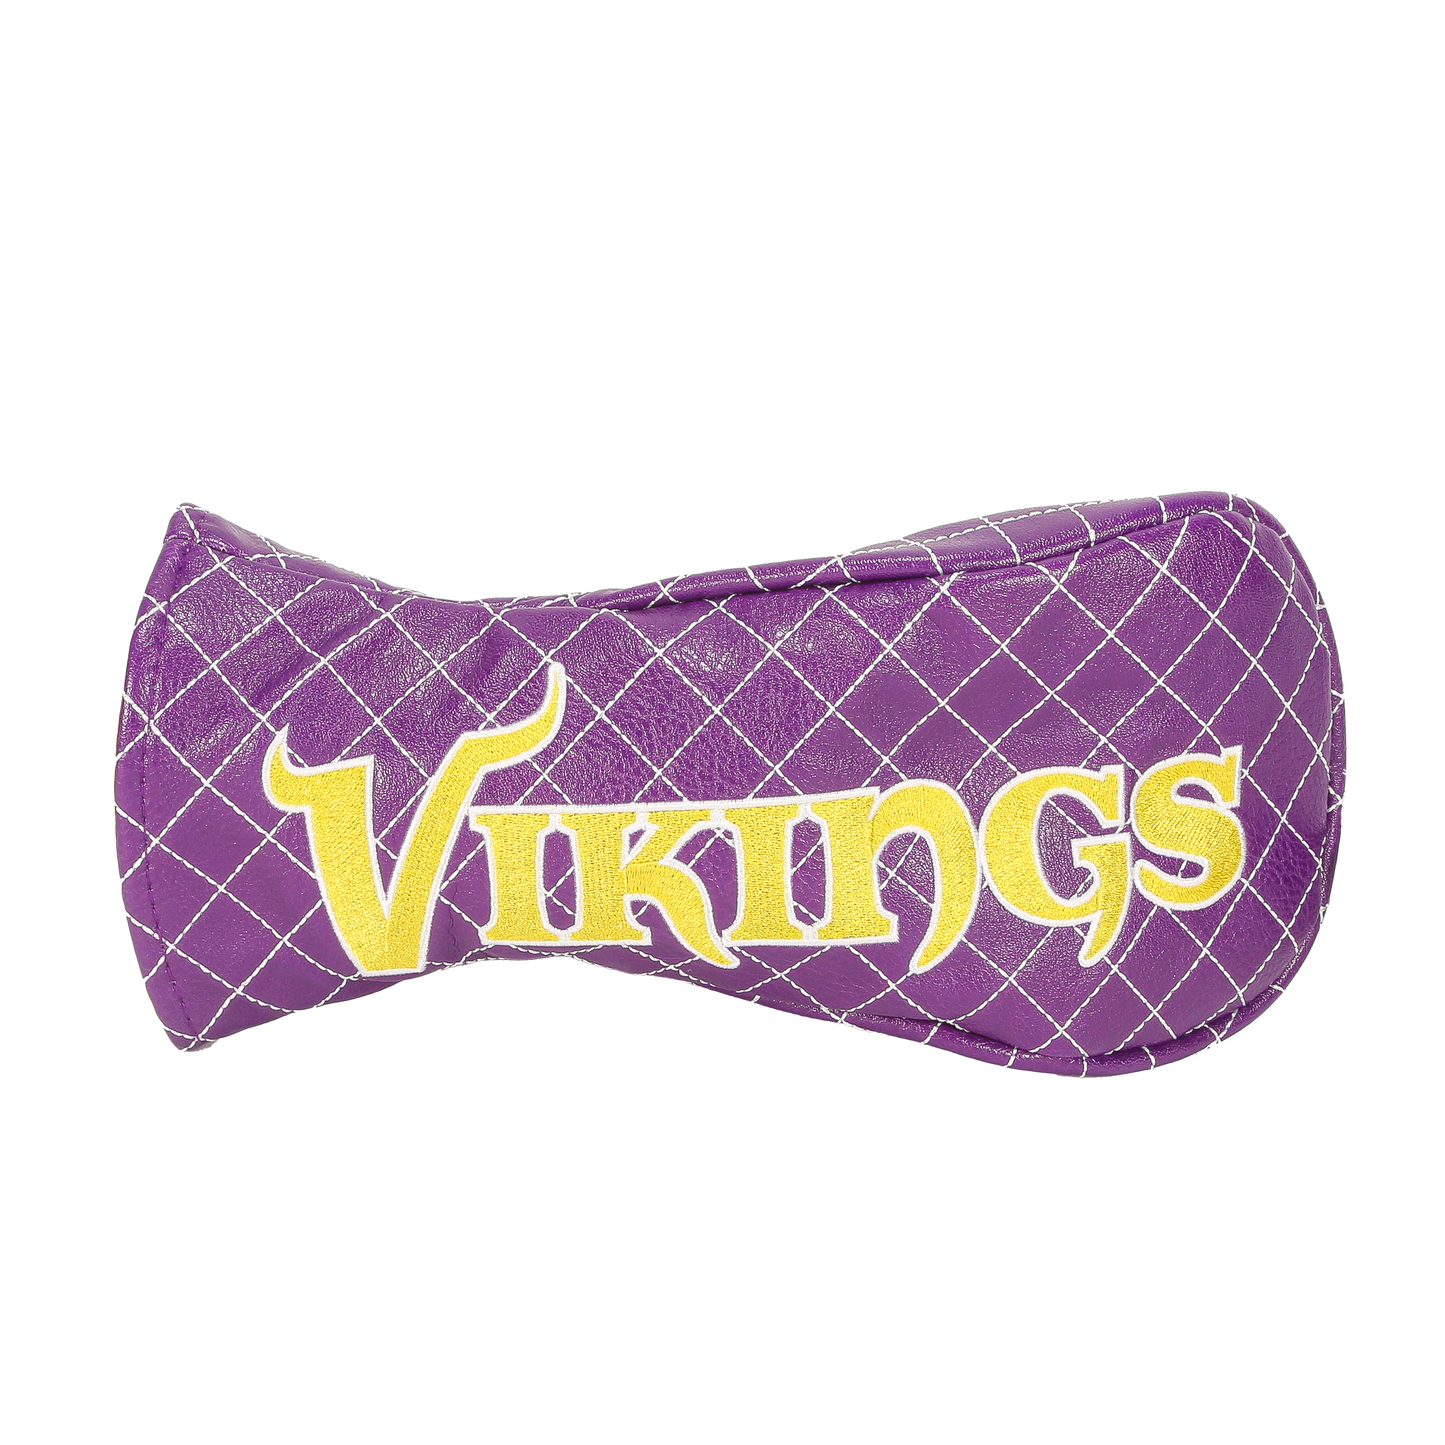 Minnesota "Vikings" Fairway Cover